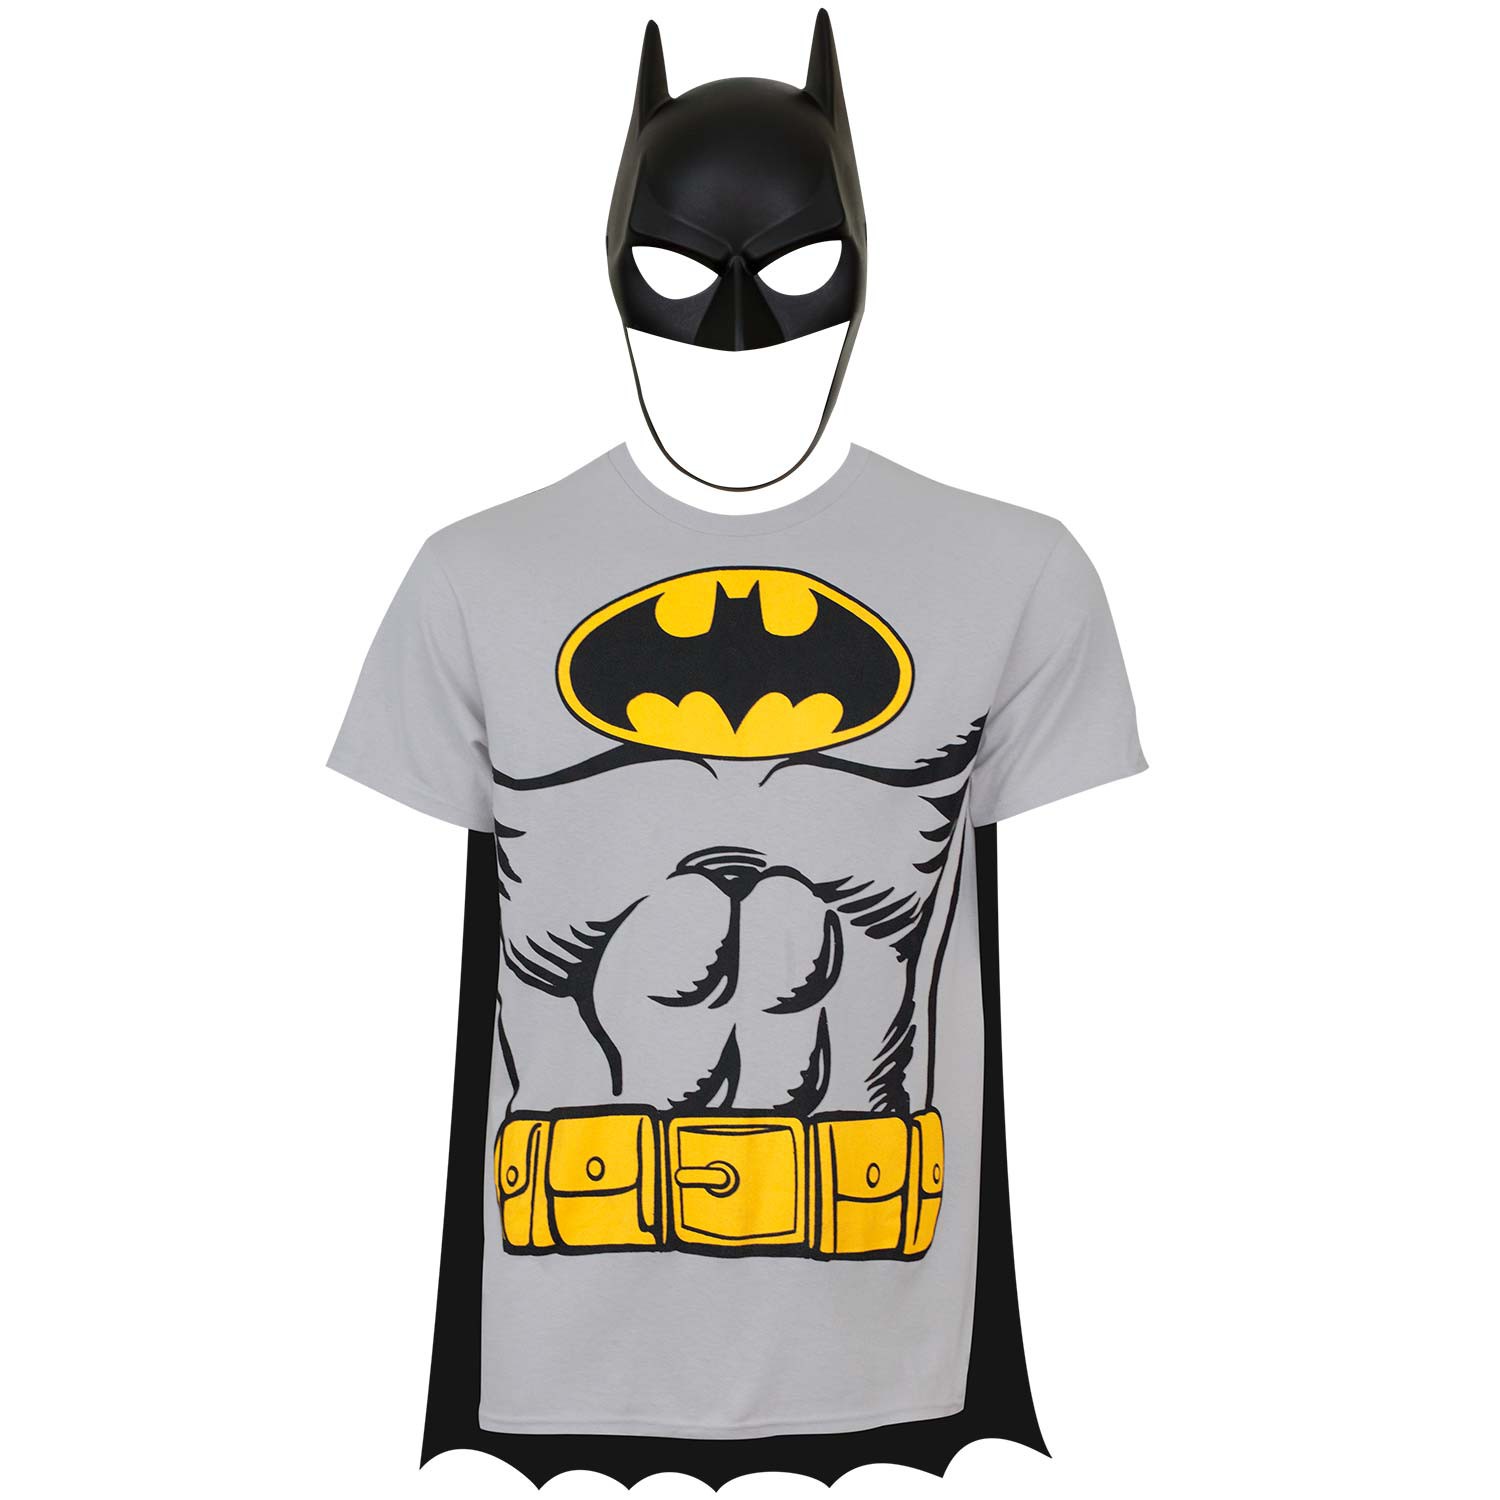 Batman Cape And Mask Costume Tee Shirt Grey | eBay